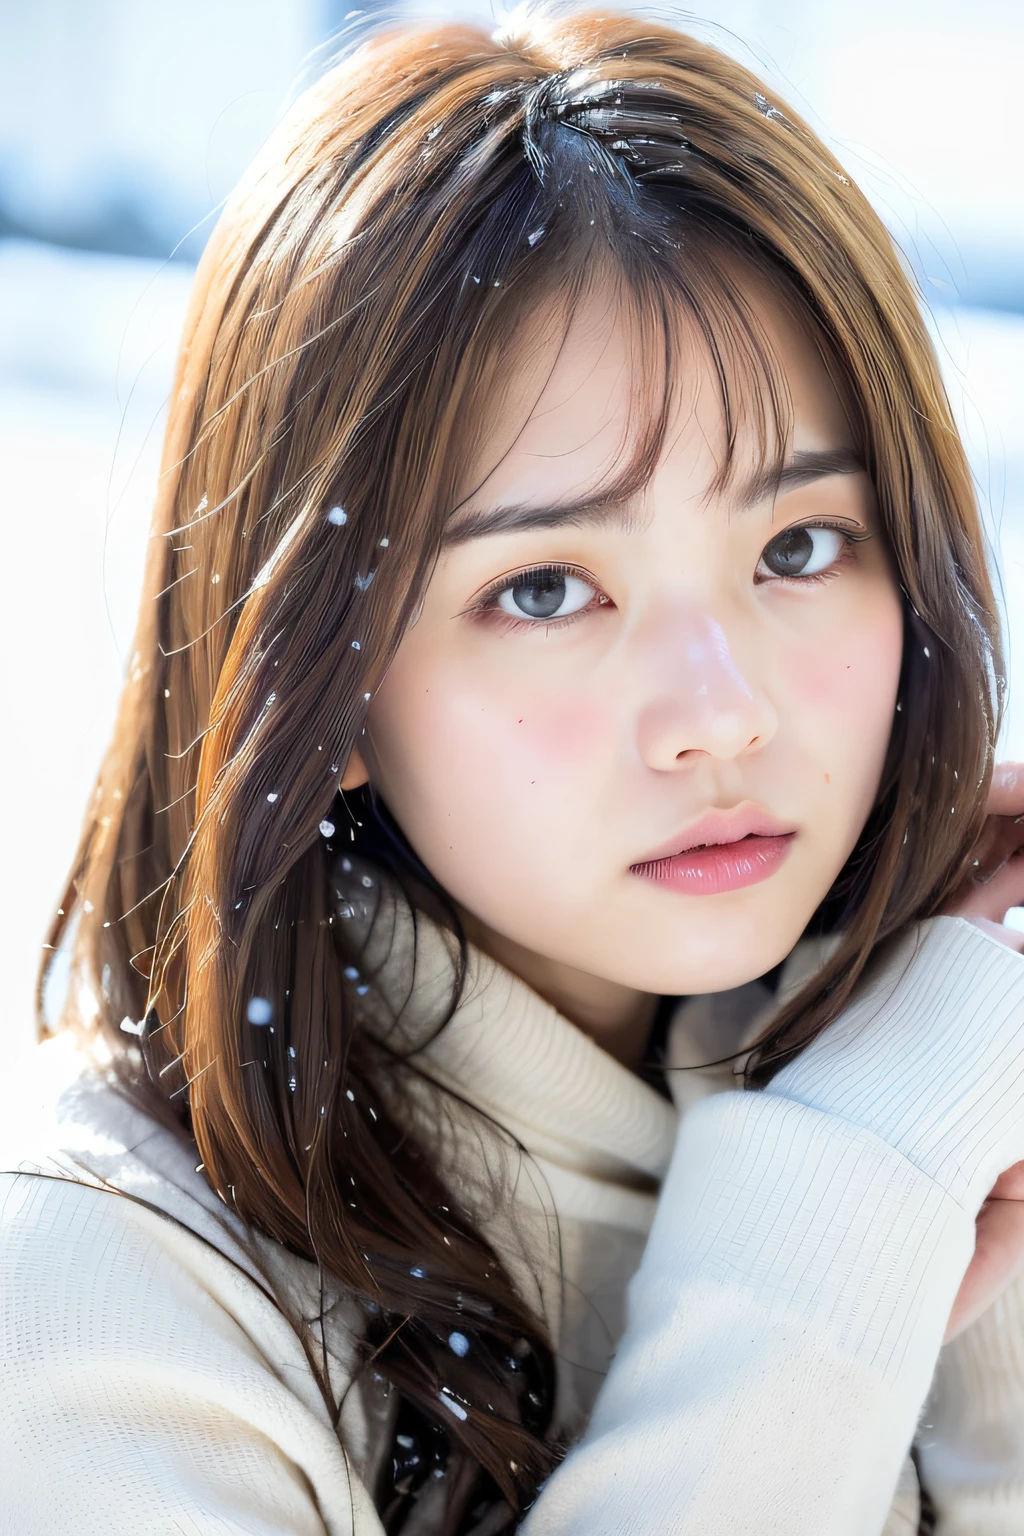 (8k, 最高品質, 傑作, 超高解像度:1.2) 美しい日本人女性の写真 (ポール・ルーベンスとレベッカ・グアイのスタイル:1.1) (憂鬱な冬の雪:1.4)